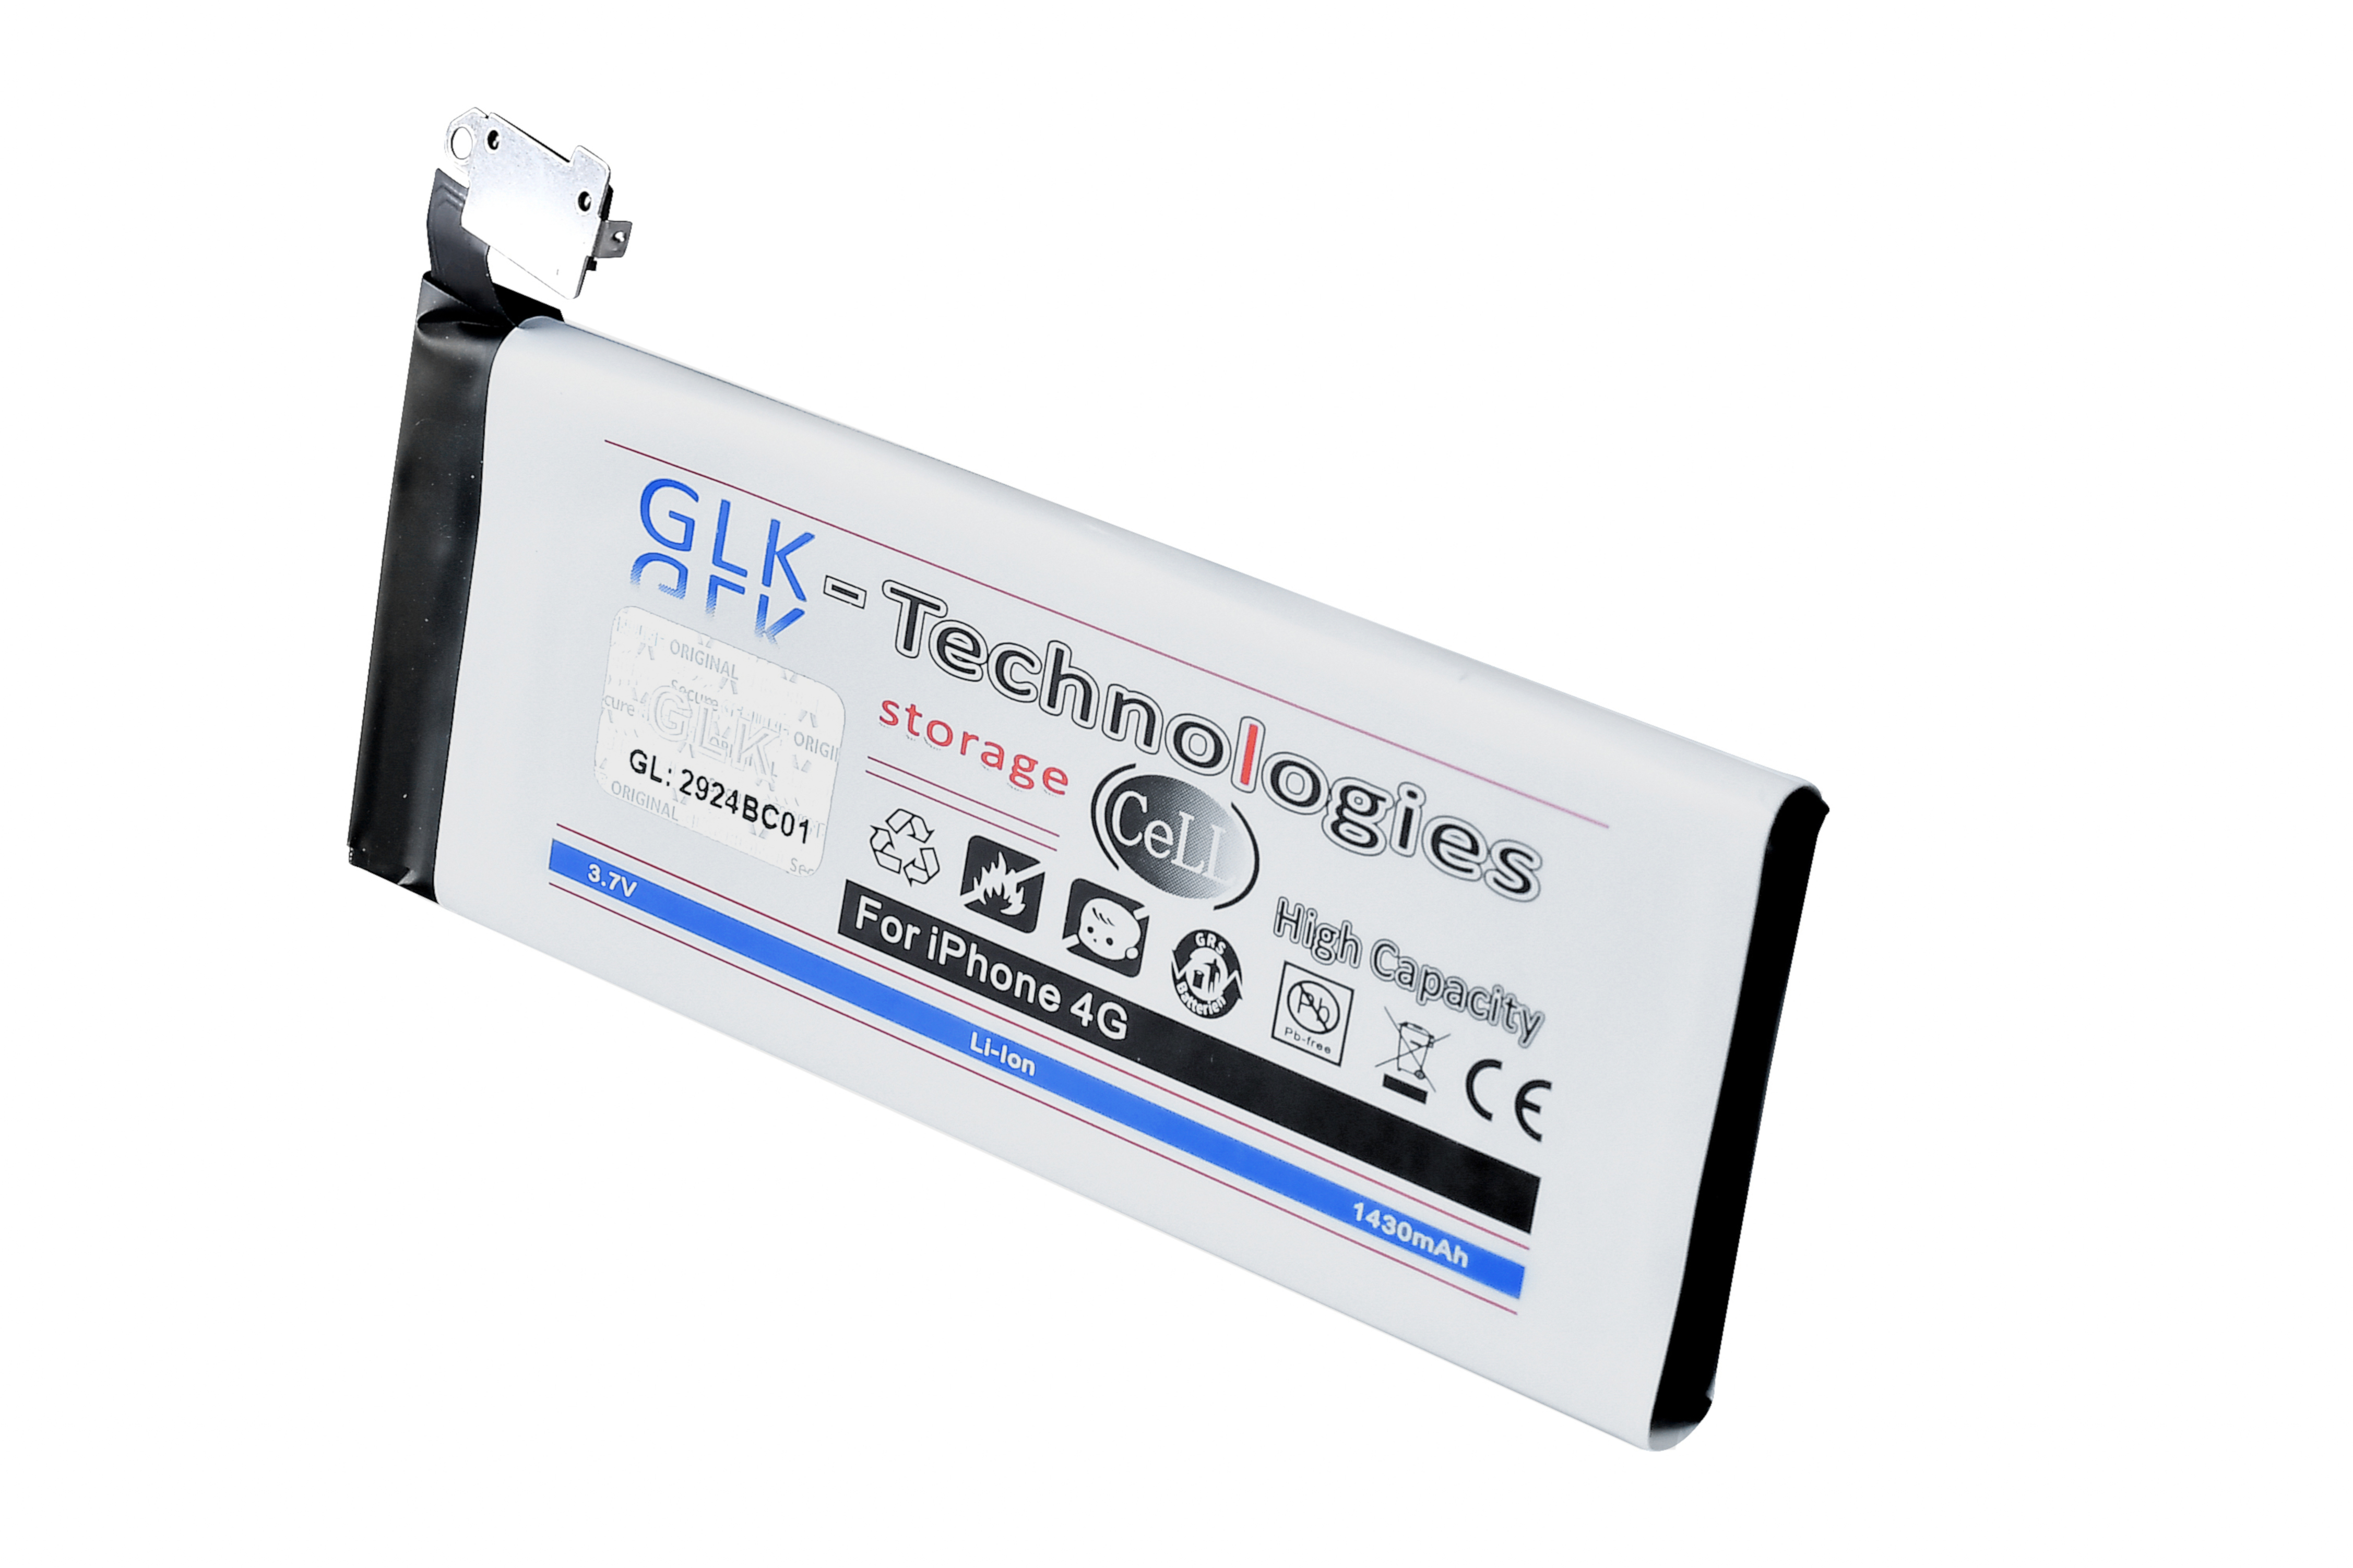 Akku, Battery Lithium-Ionen-Akku 1430mAh GLK-TECHNOLOGIES inkl. 3.8 für Akku Smartphone Ersatz Werkzeug 4 1430mAh High iPhone Lithium-Ionen, Ersatz Power Volt,